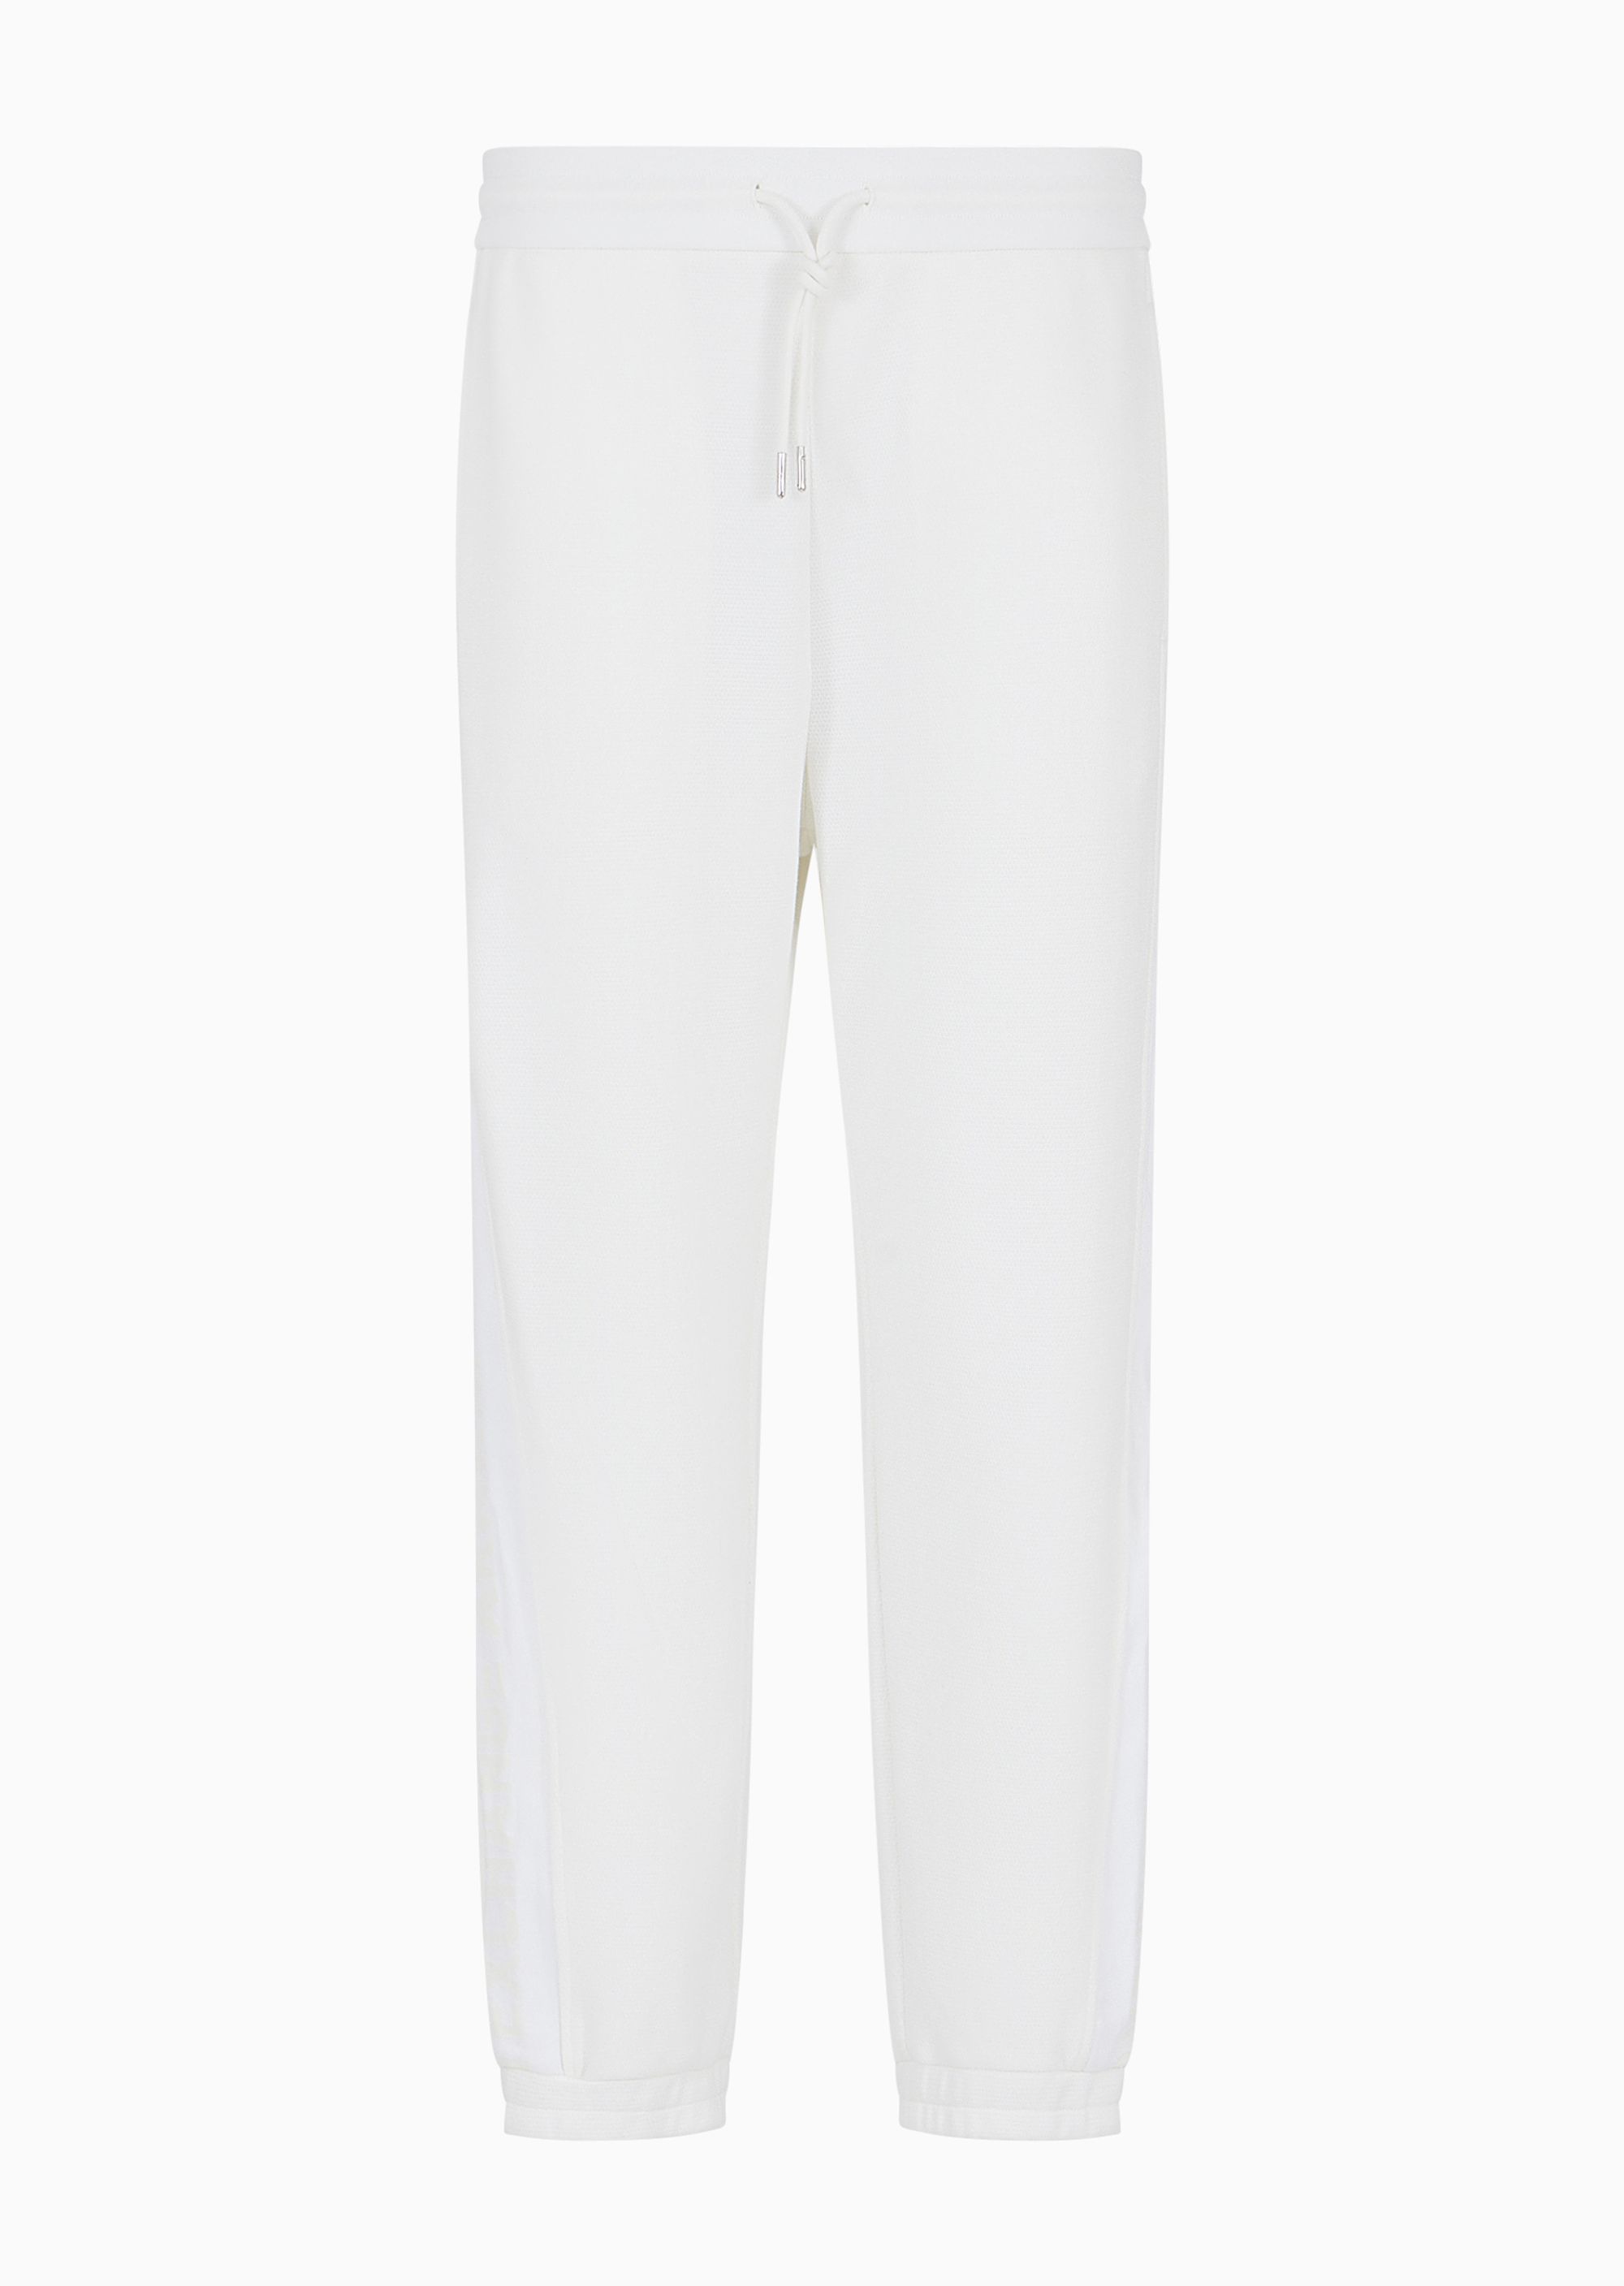 Спортивные брюки Armani Exchange, белый брюки спортивные женские dysot темно синие